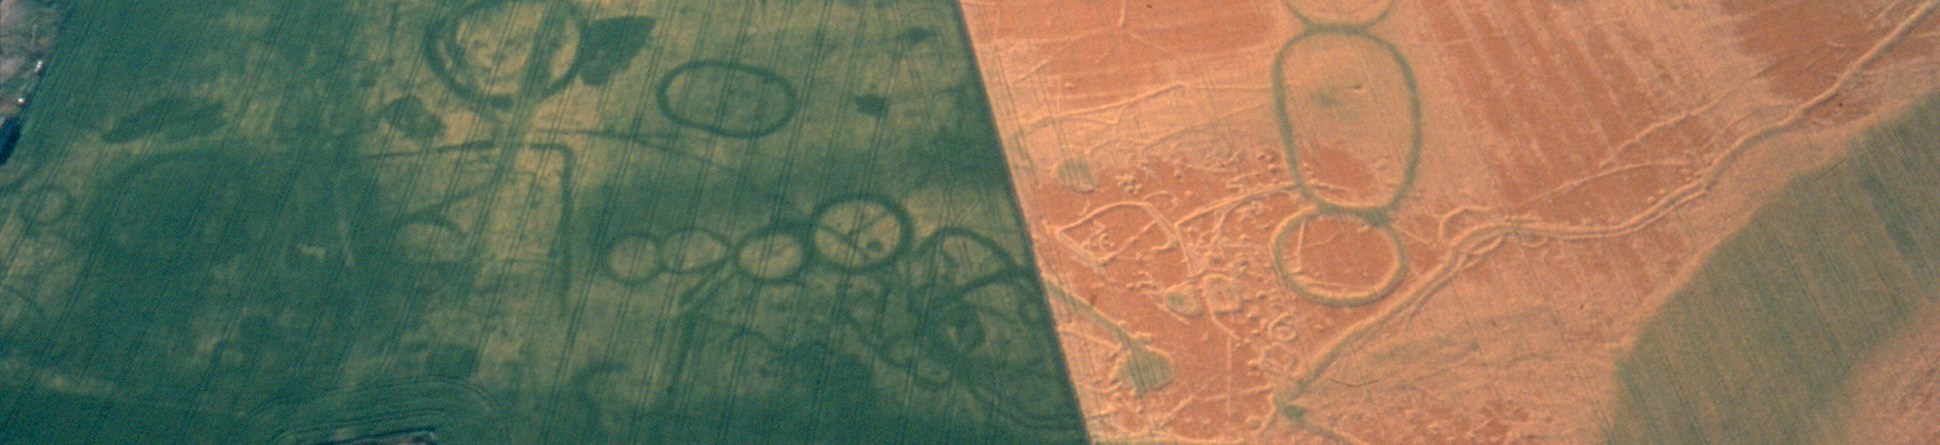 Aerial view of circular crop marks